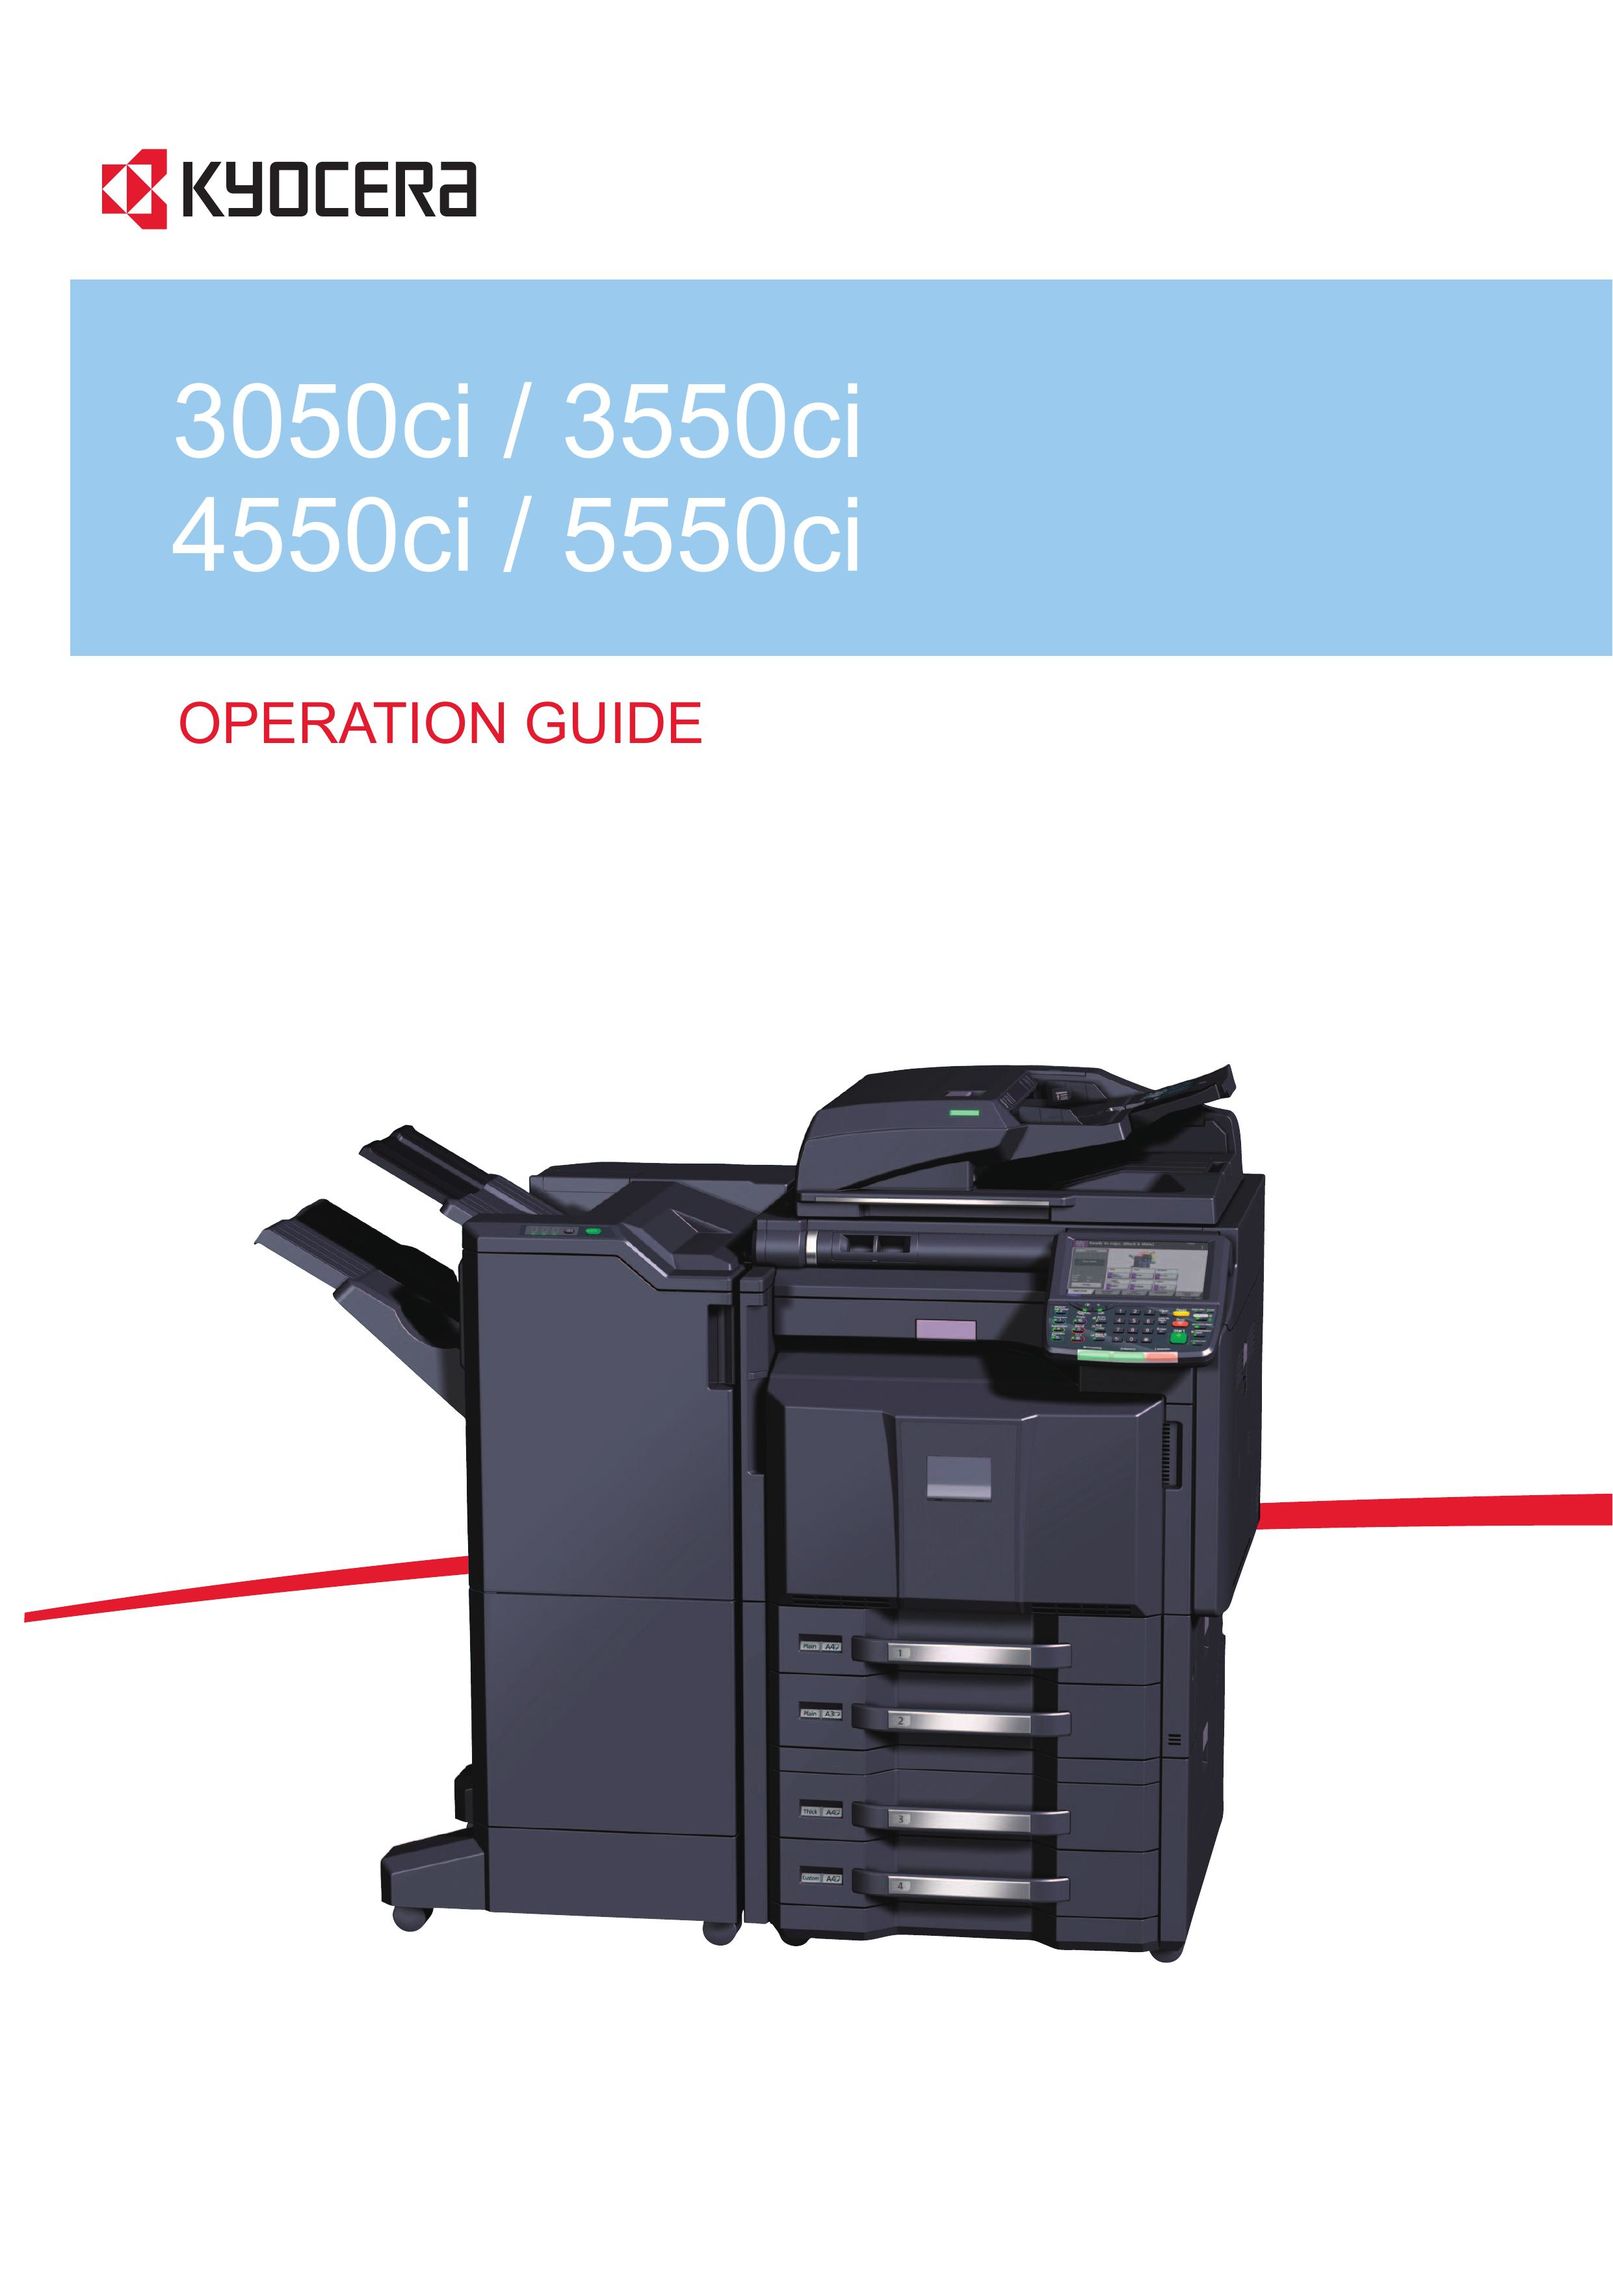 Kyocera 3550ci All in One Printer User Manual